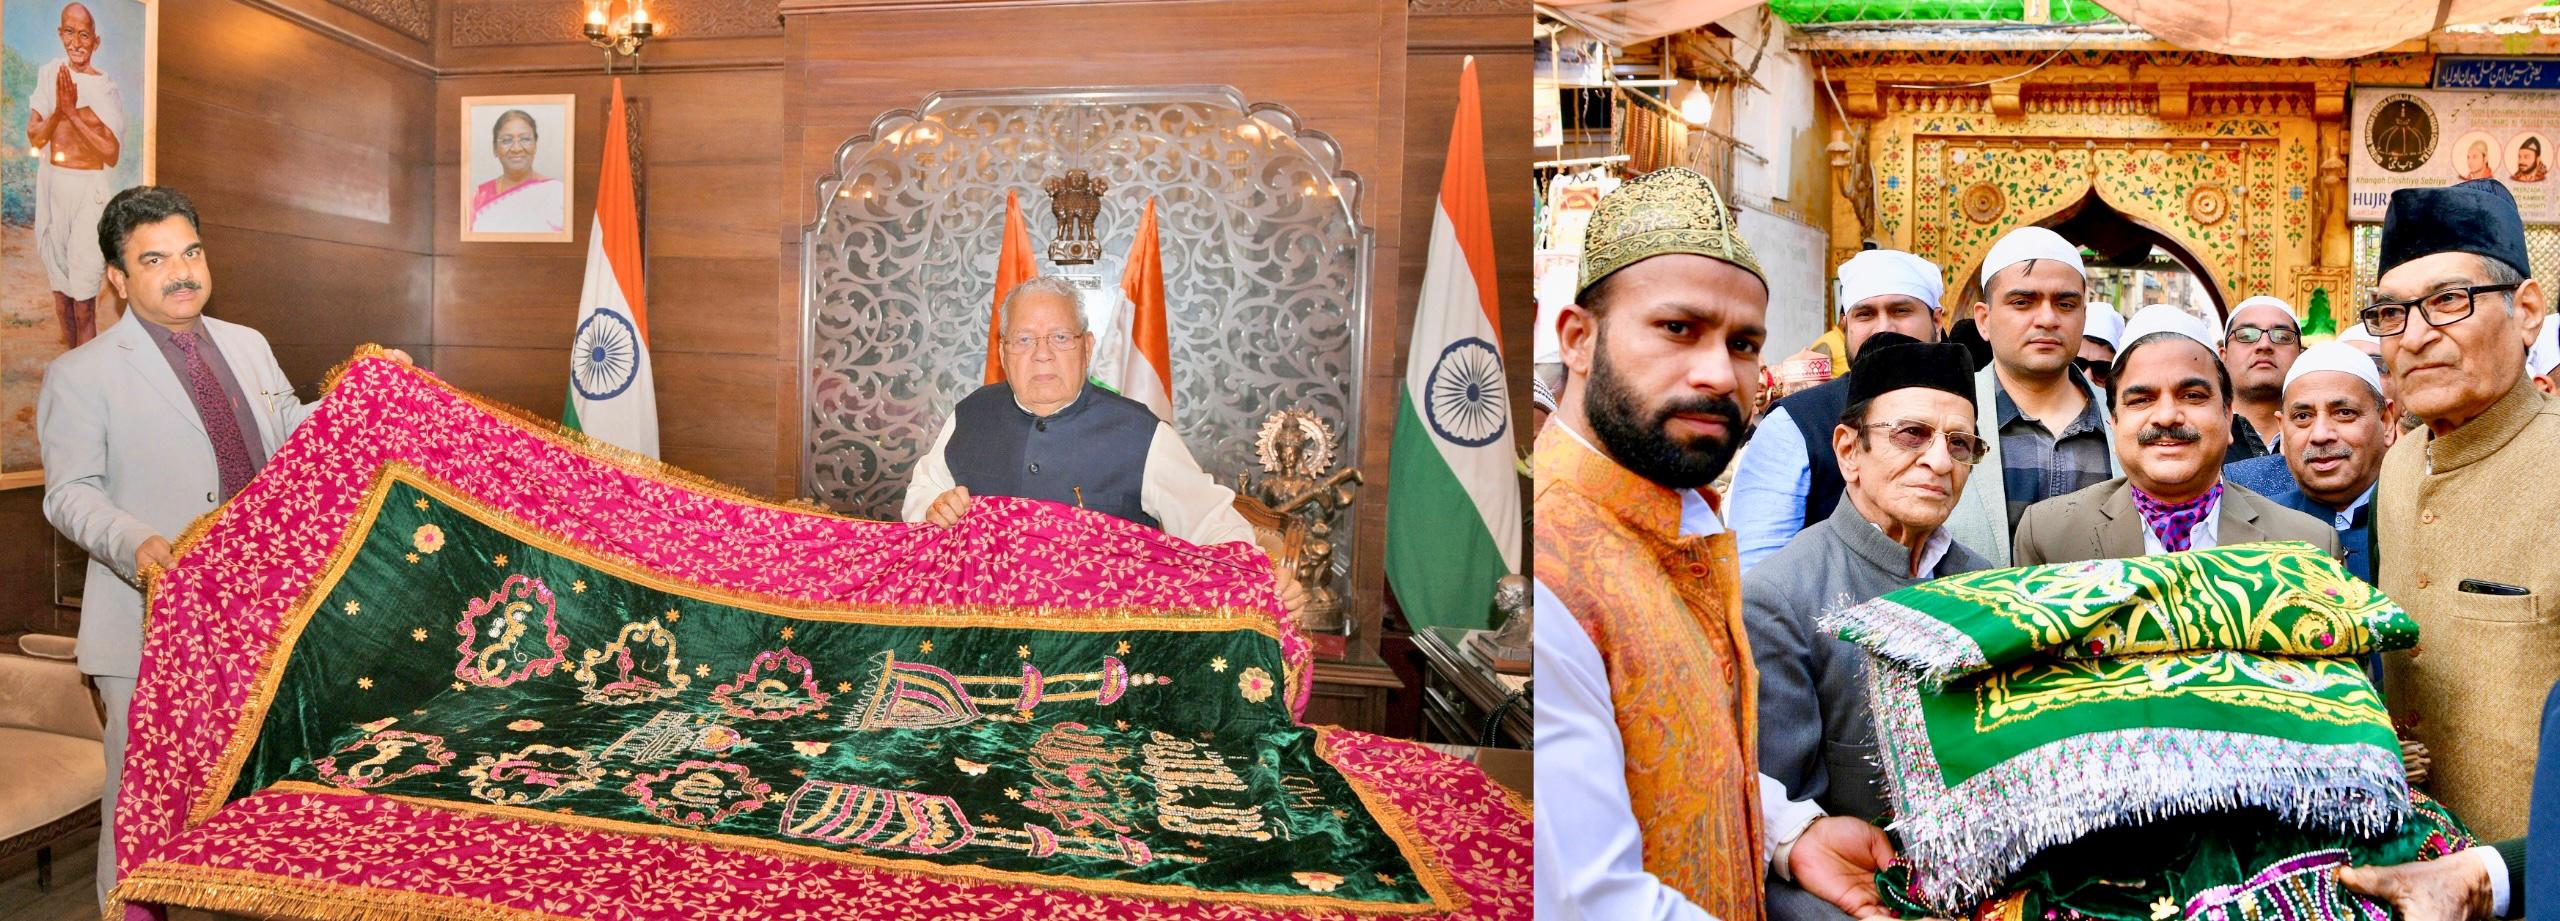 Chaddar offered at Dargah Sharif behalf of Hon'ble Governor